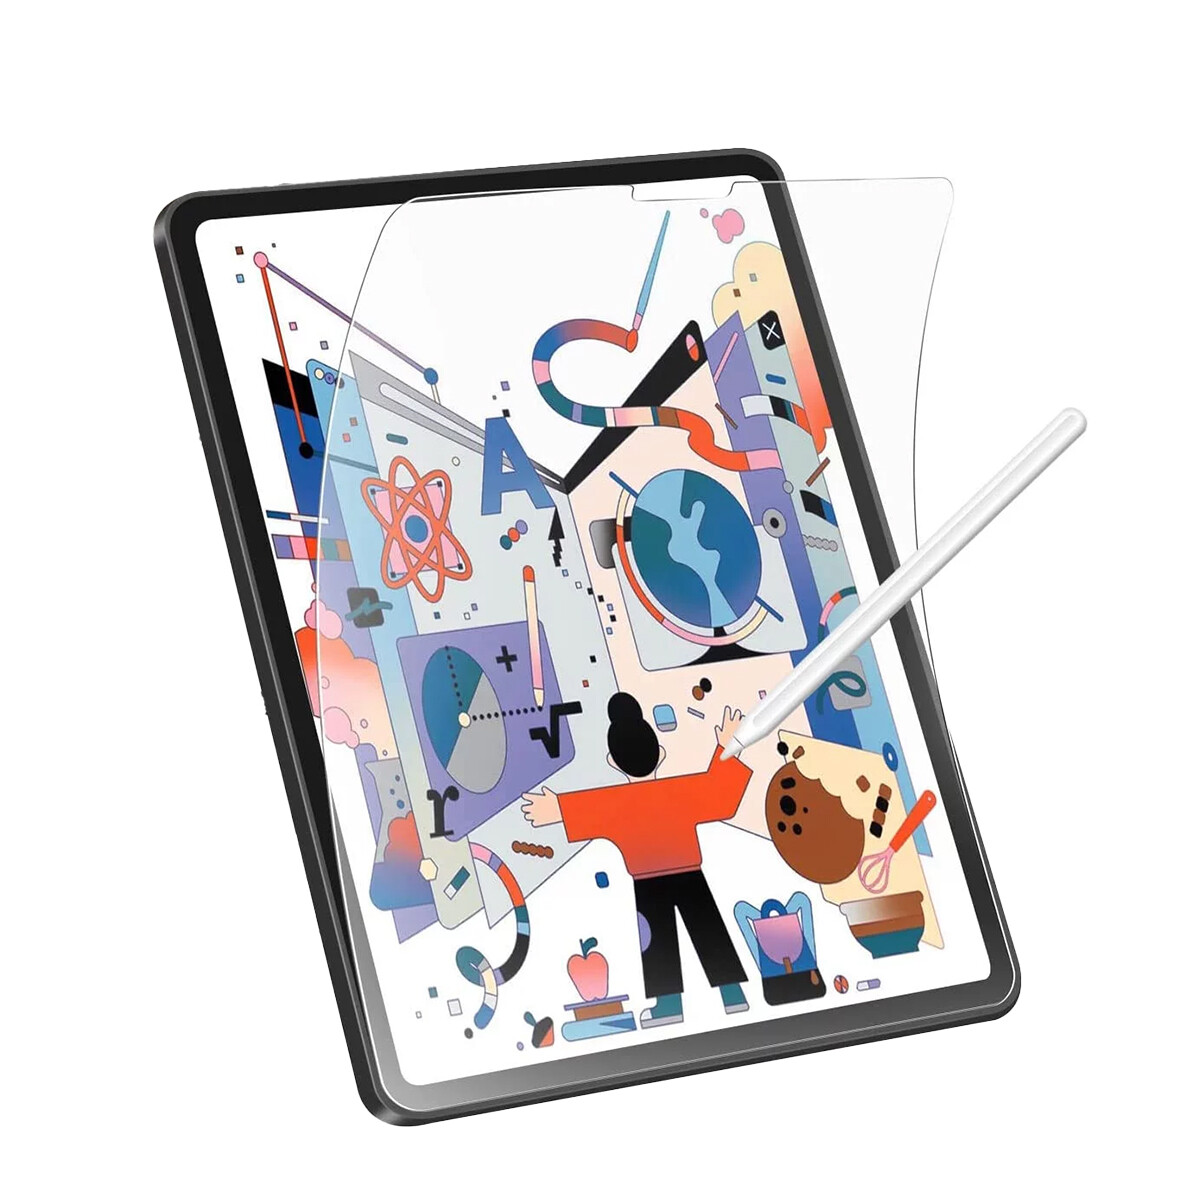 Protector de Pantalla Mate Textura Papel PaperFeel 10.9" para iPad Air 5th Generation - Transparente 